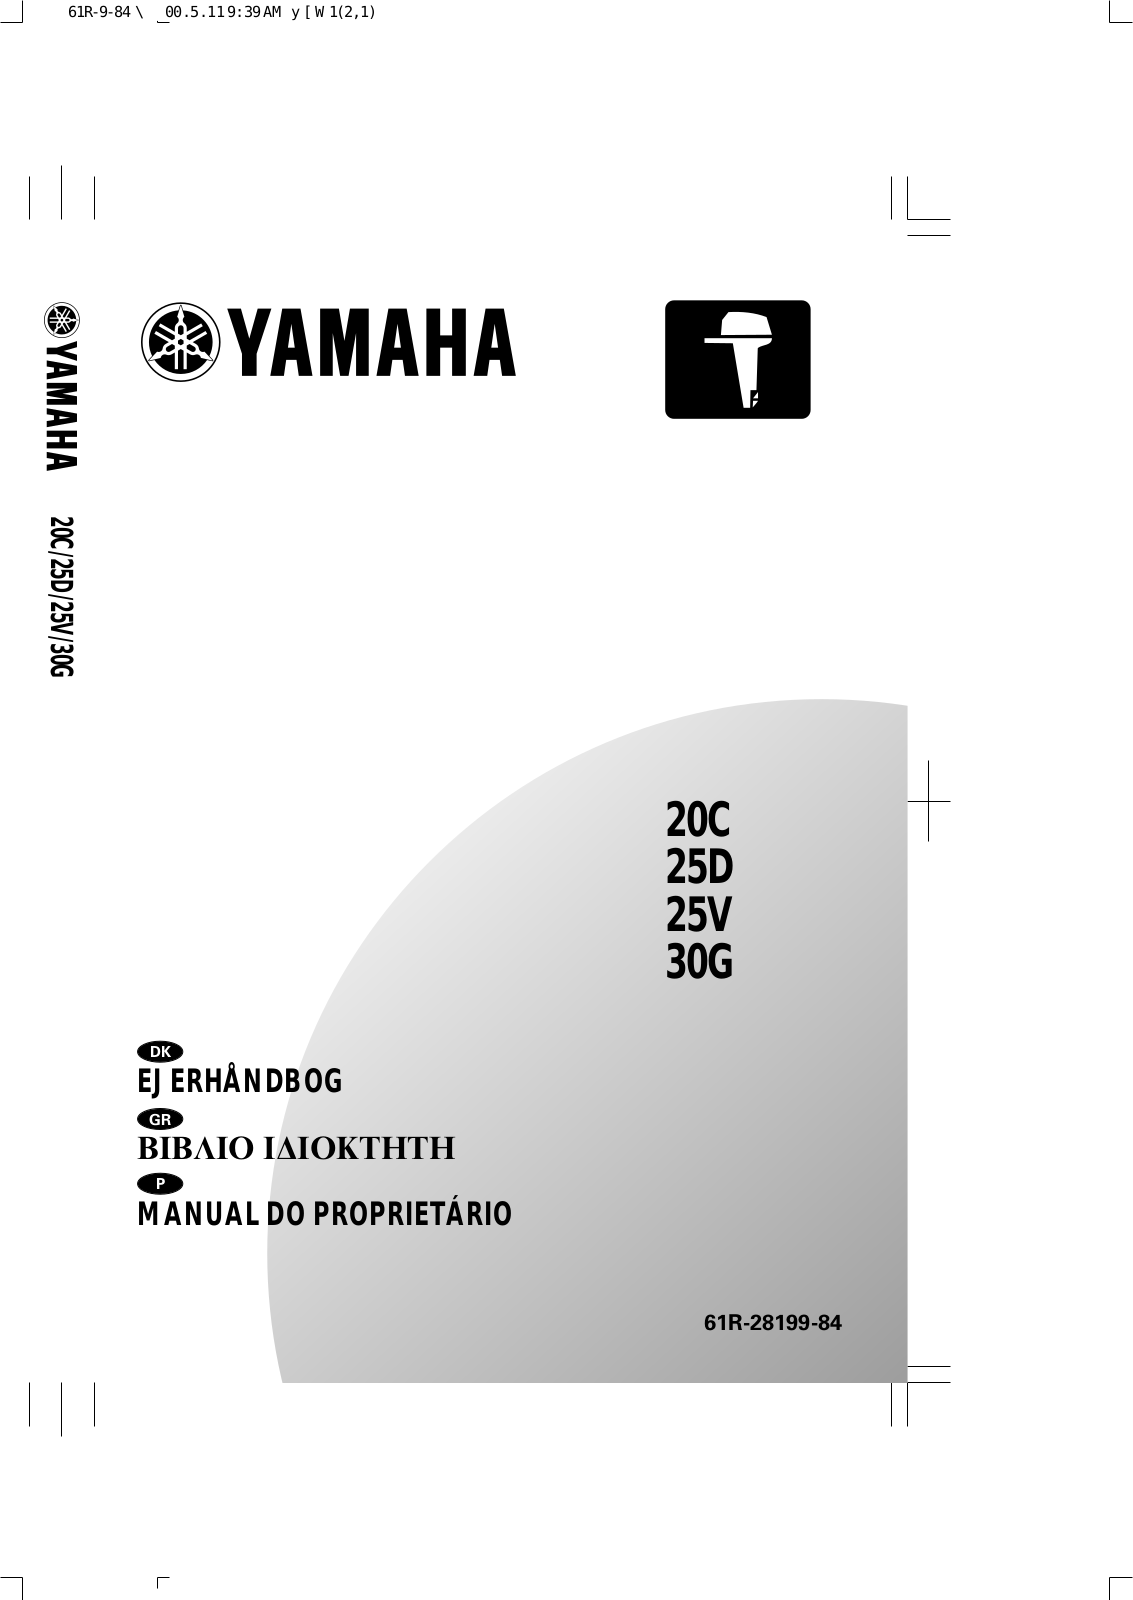 Yamaha 20C, 25D, 25V, 30G User Manual